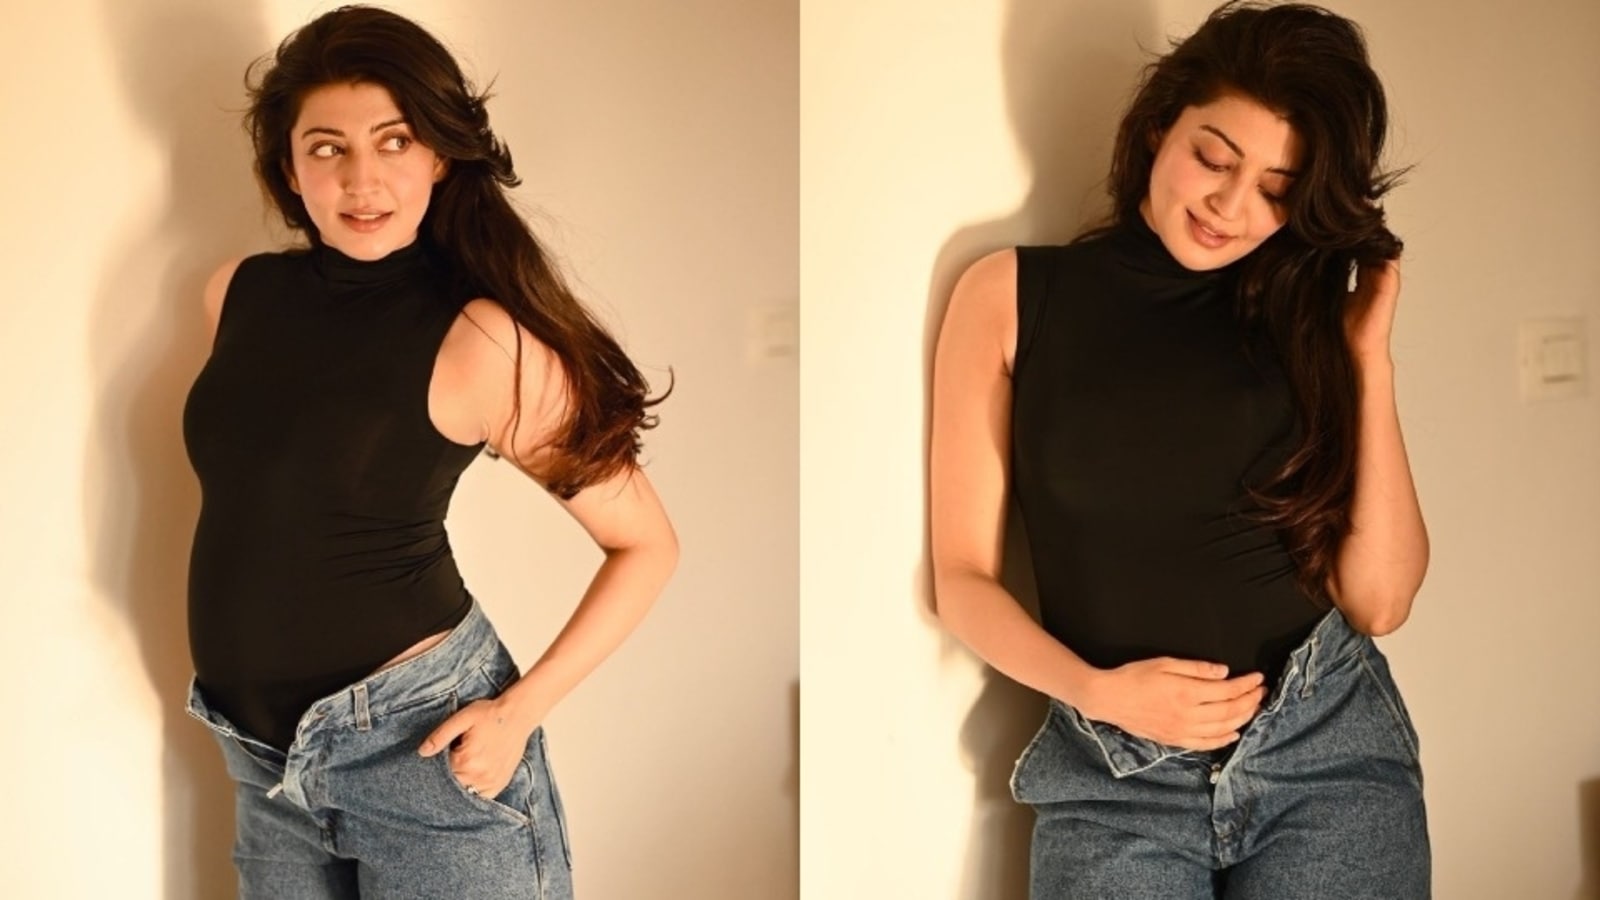 Pranitha Subhash announces 2nd pregnancy with cute caption: ‘Pants don't fit…’ - Hindustan Times